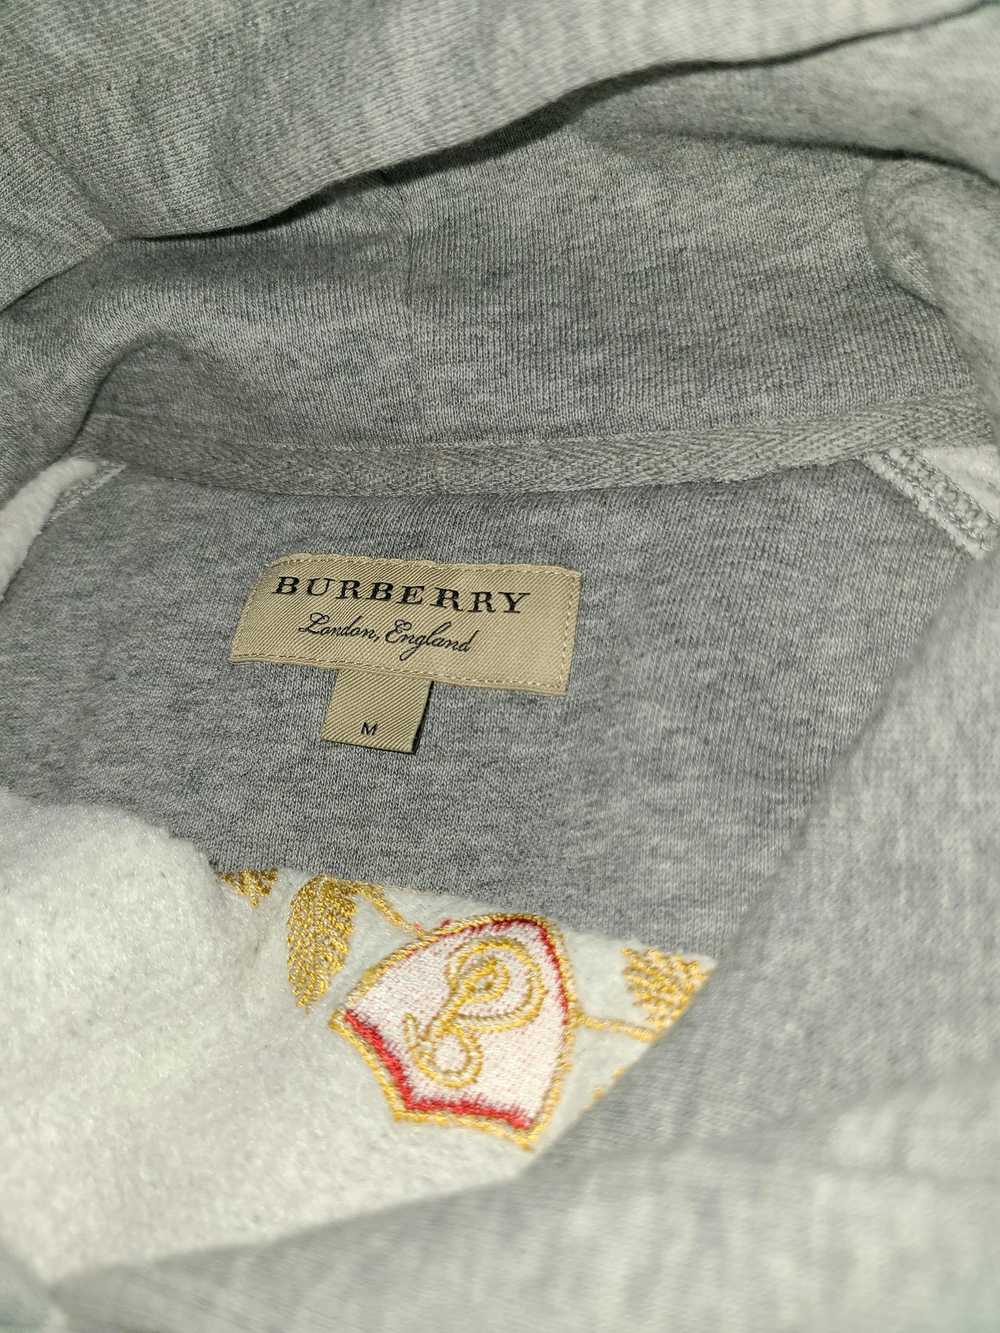 Burberry Burberry - image 2